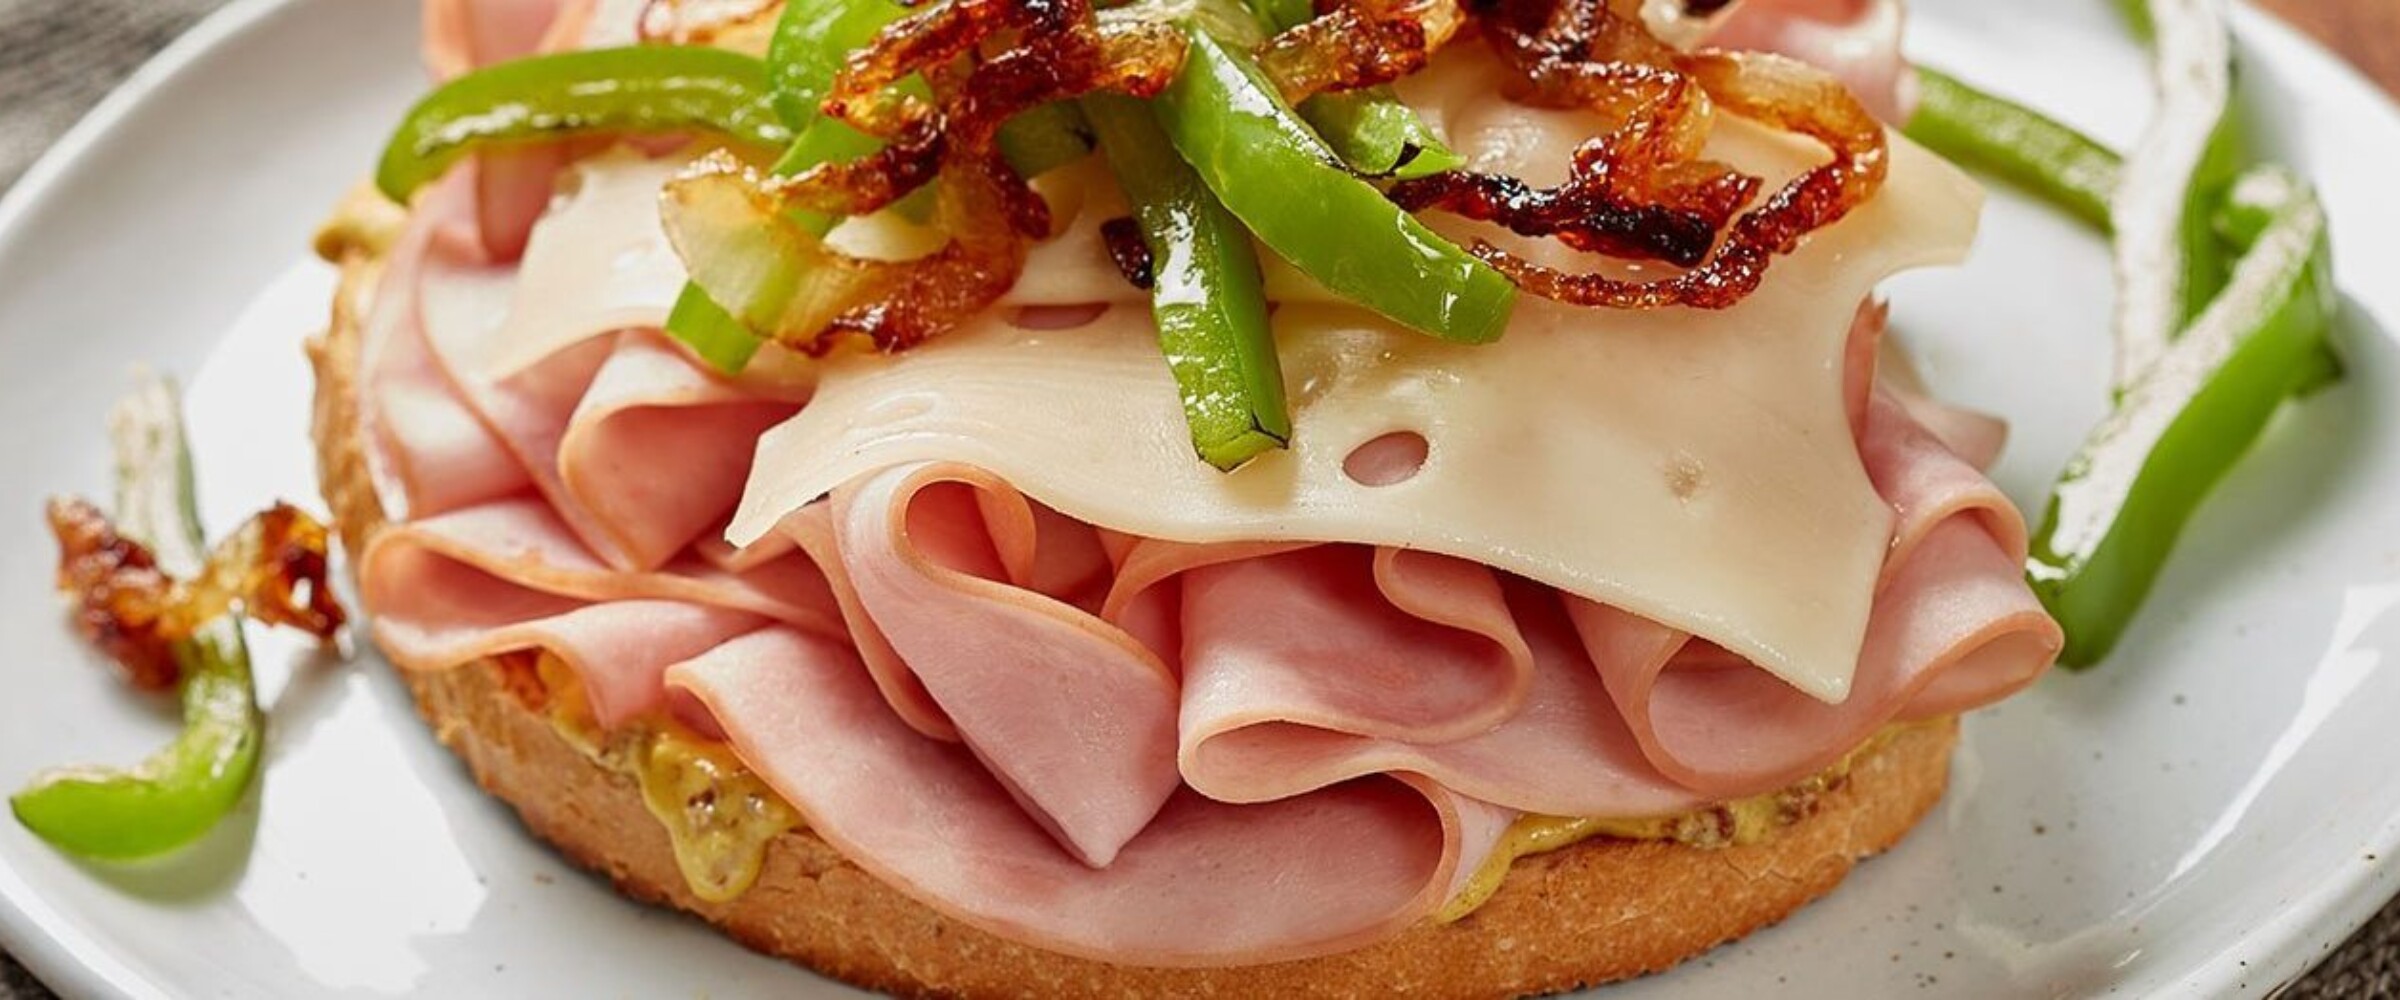 Ham and Swiss sandwich